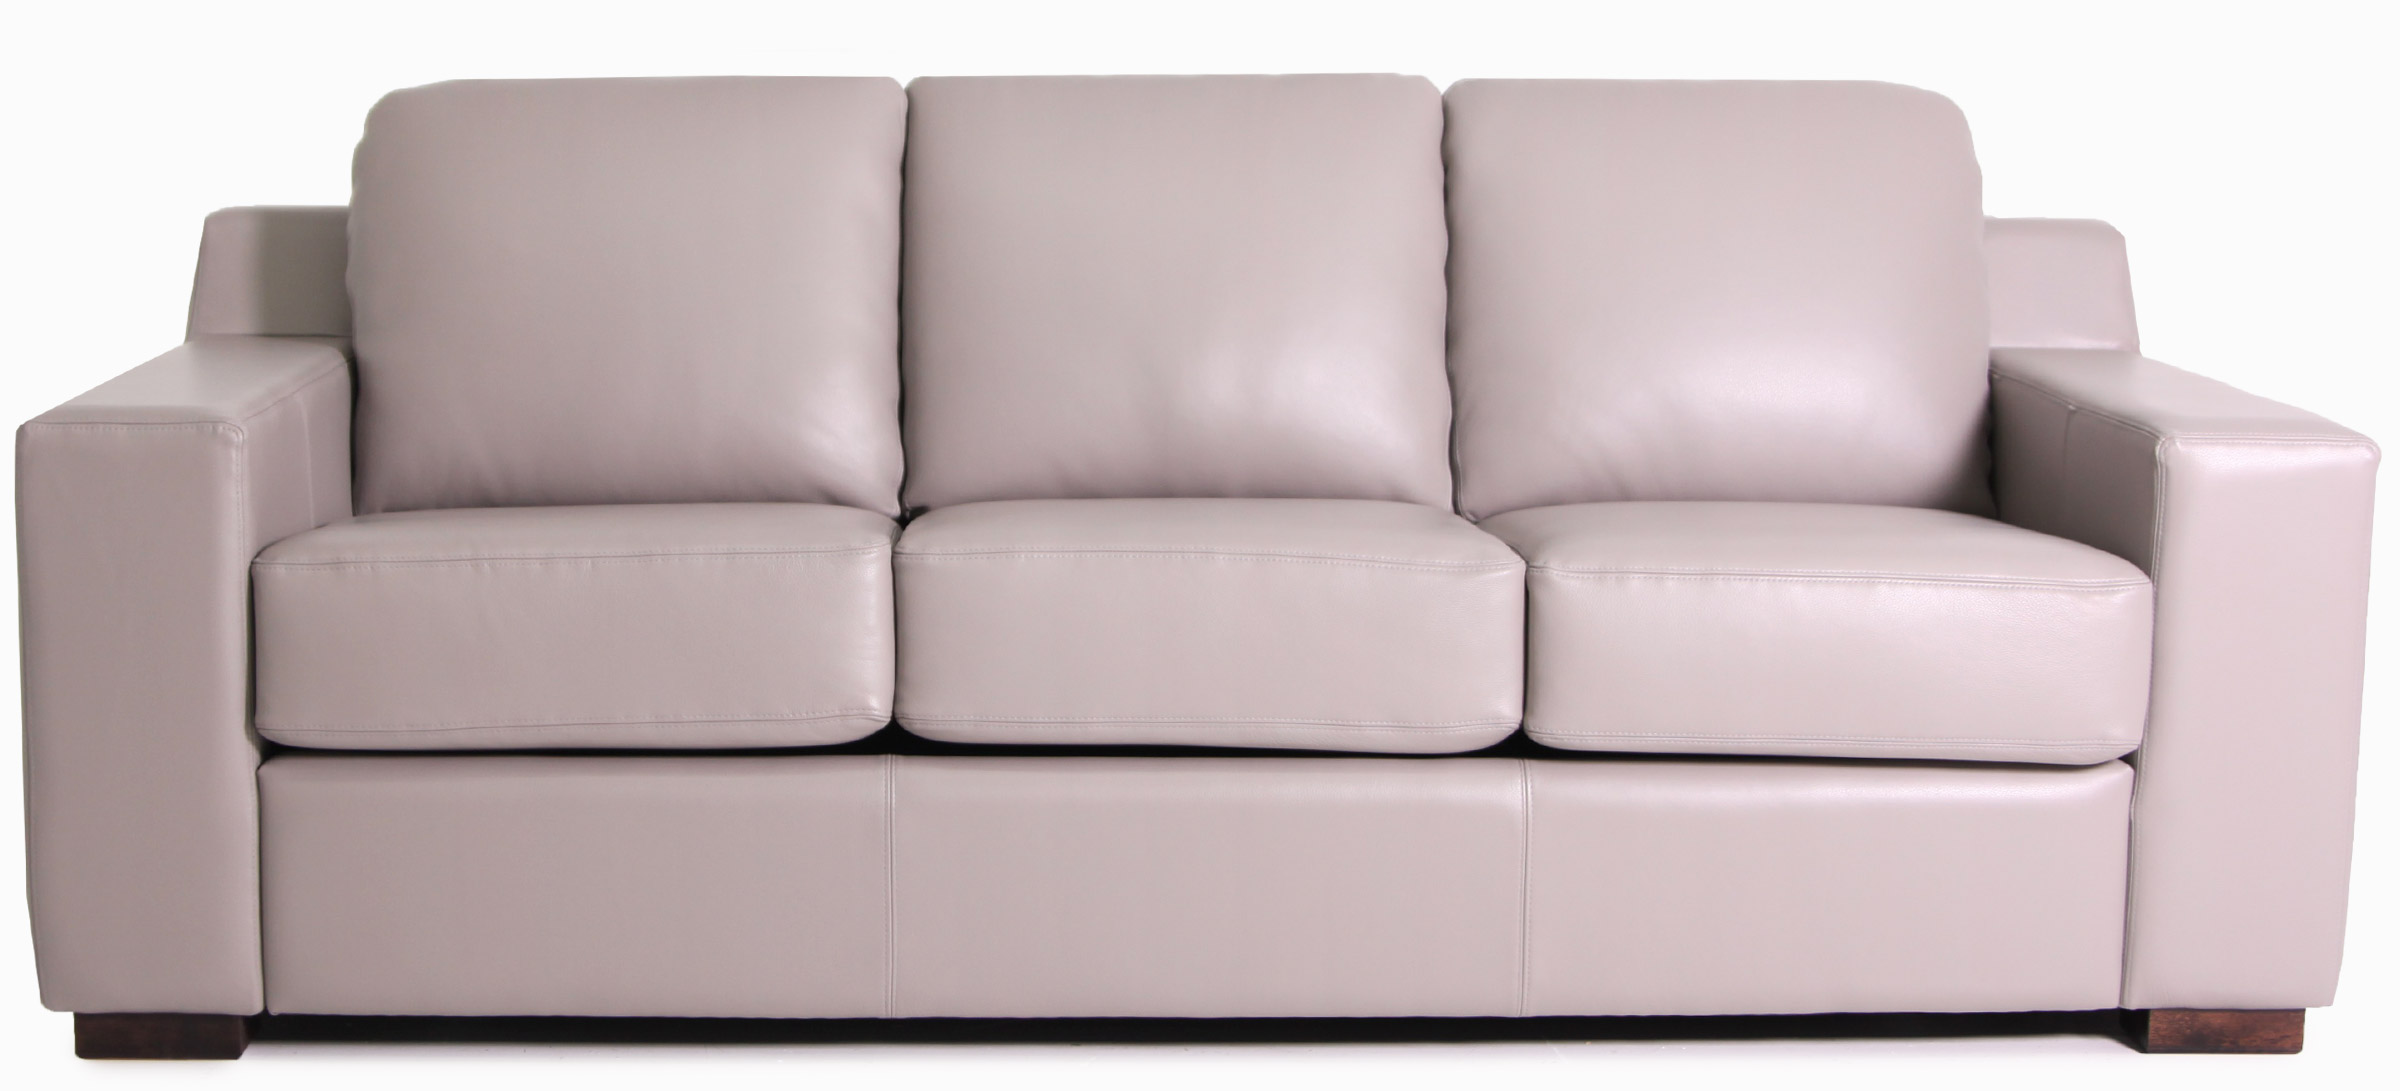 Riopel sofa